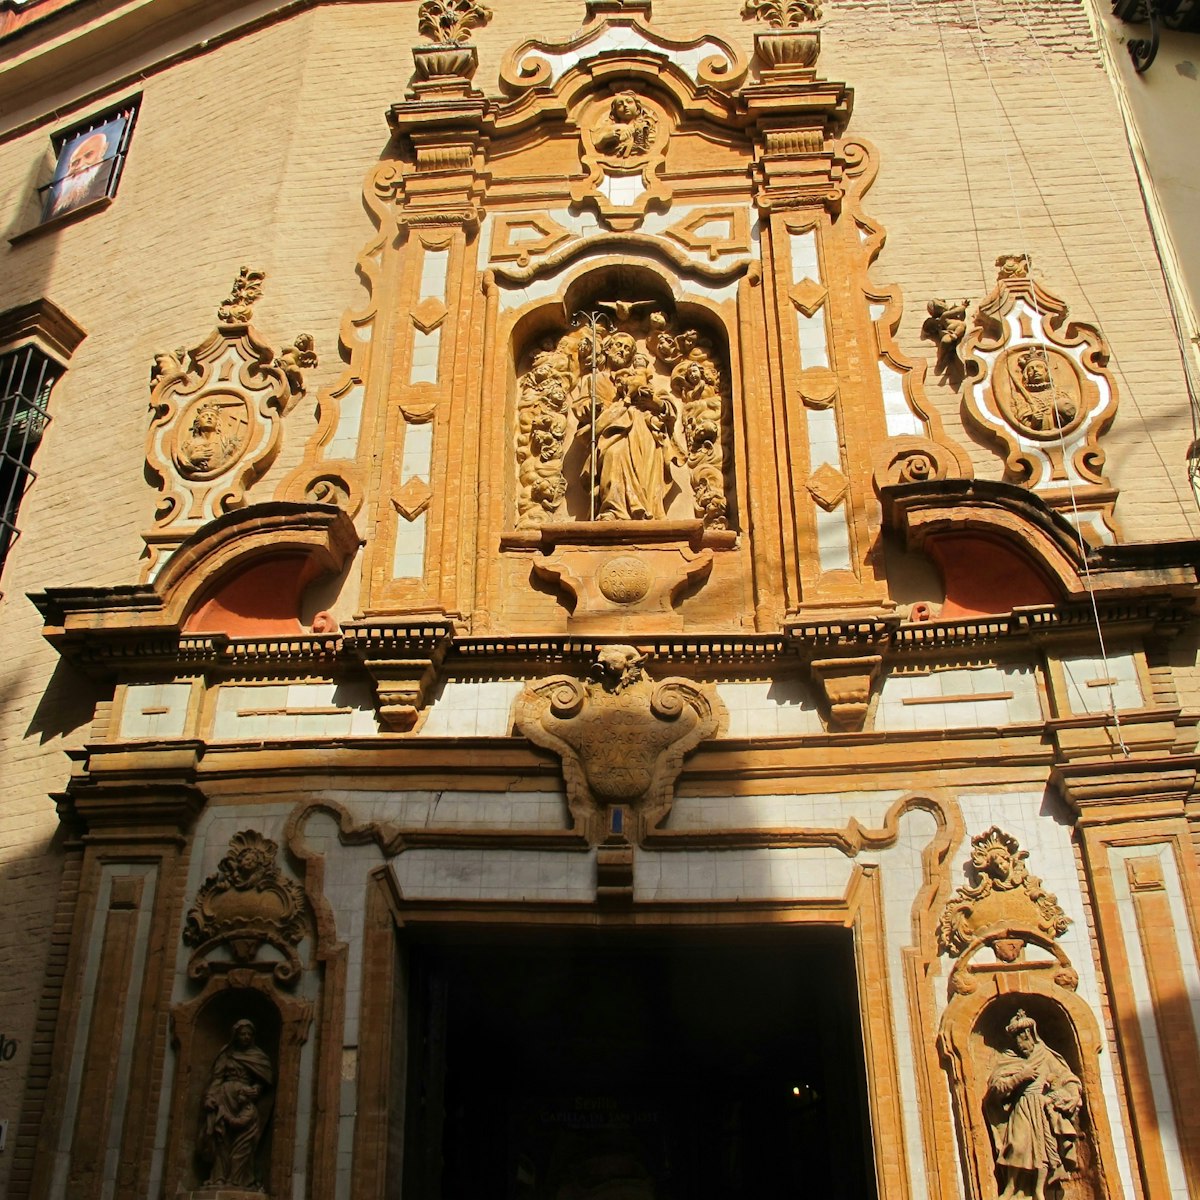 Capilla de San Jose entrance doorway with decoration